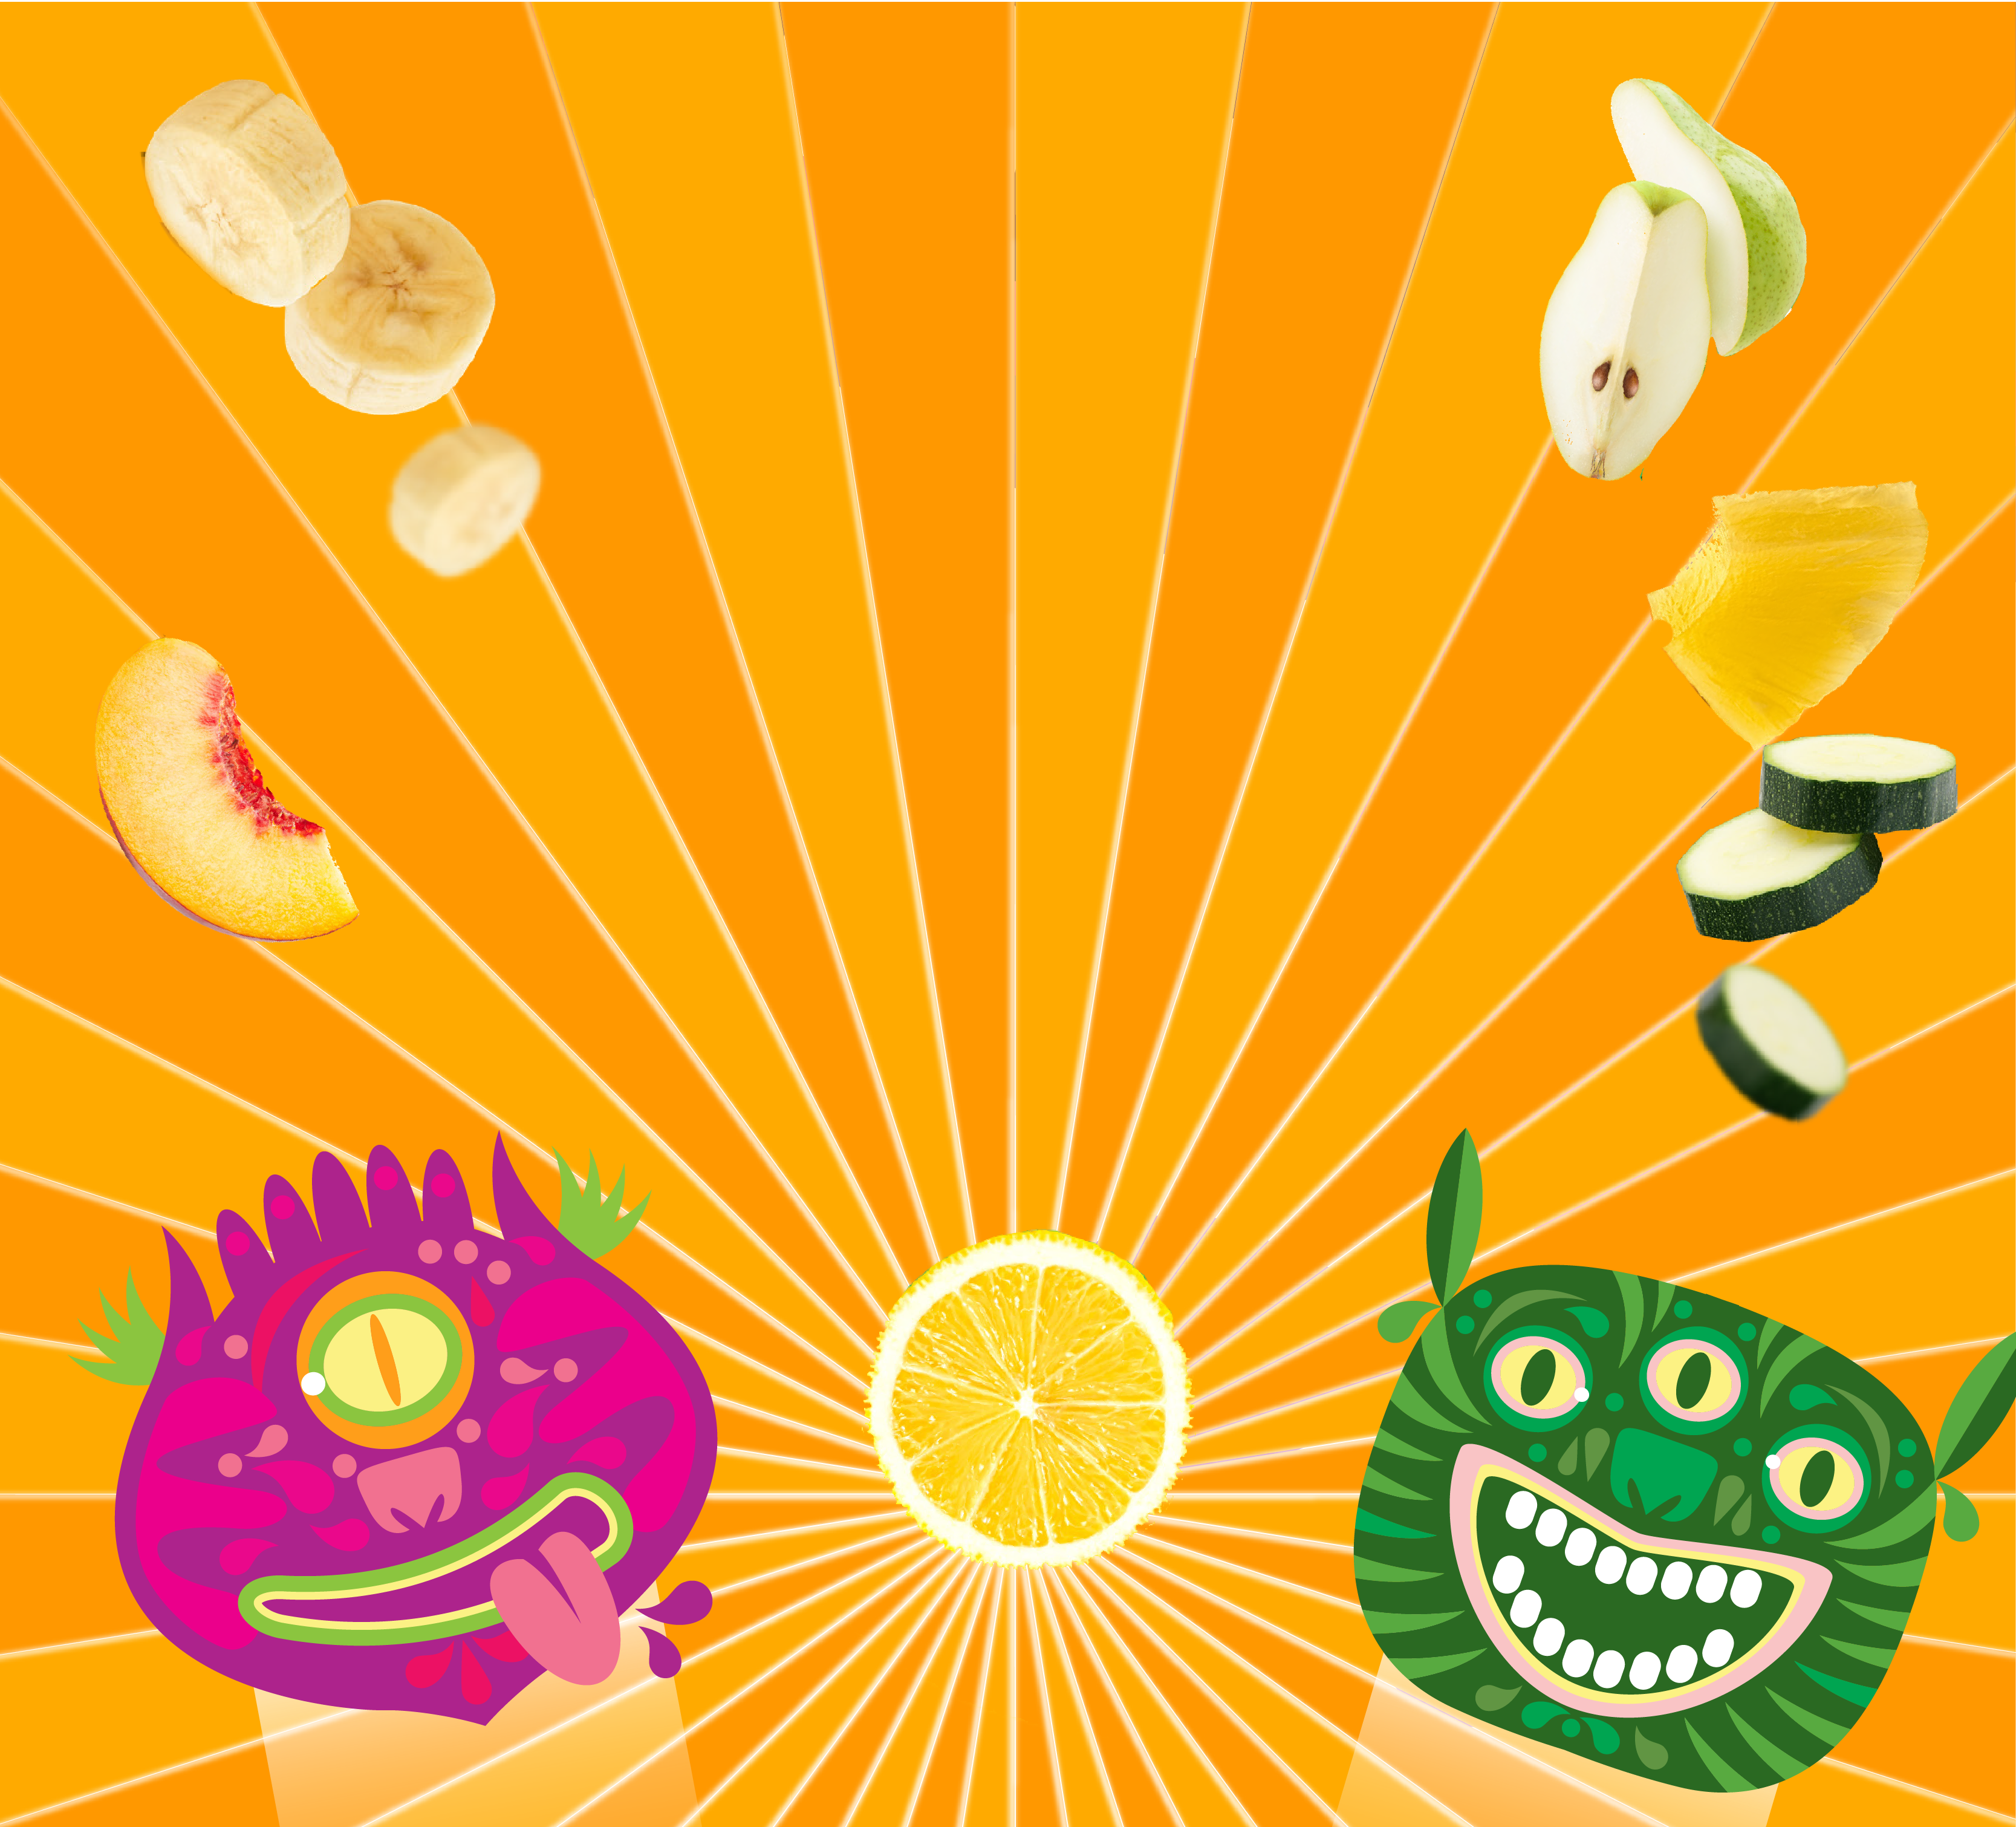 About Ninju products header desktop. Banner includes two Ninju monsters and flying fruit & vegetables.